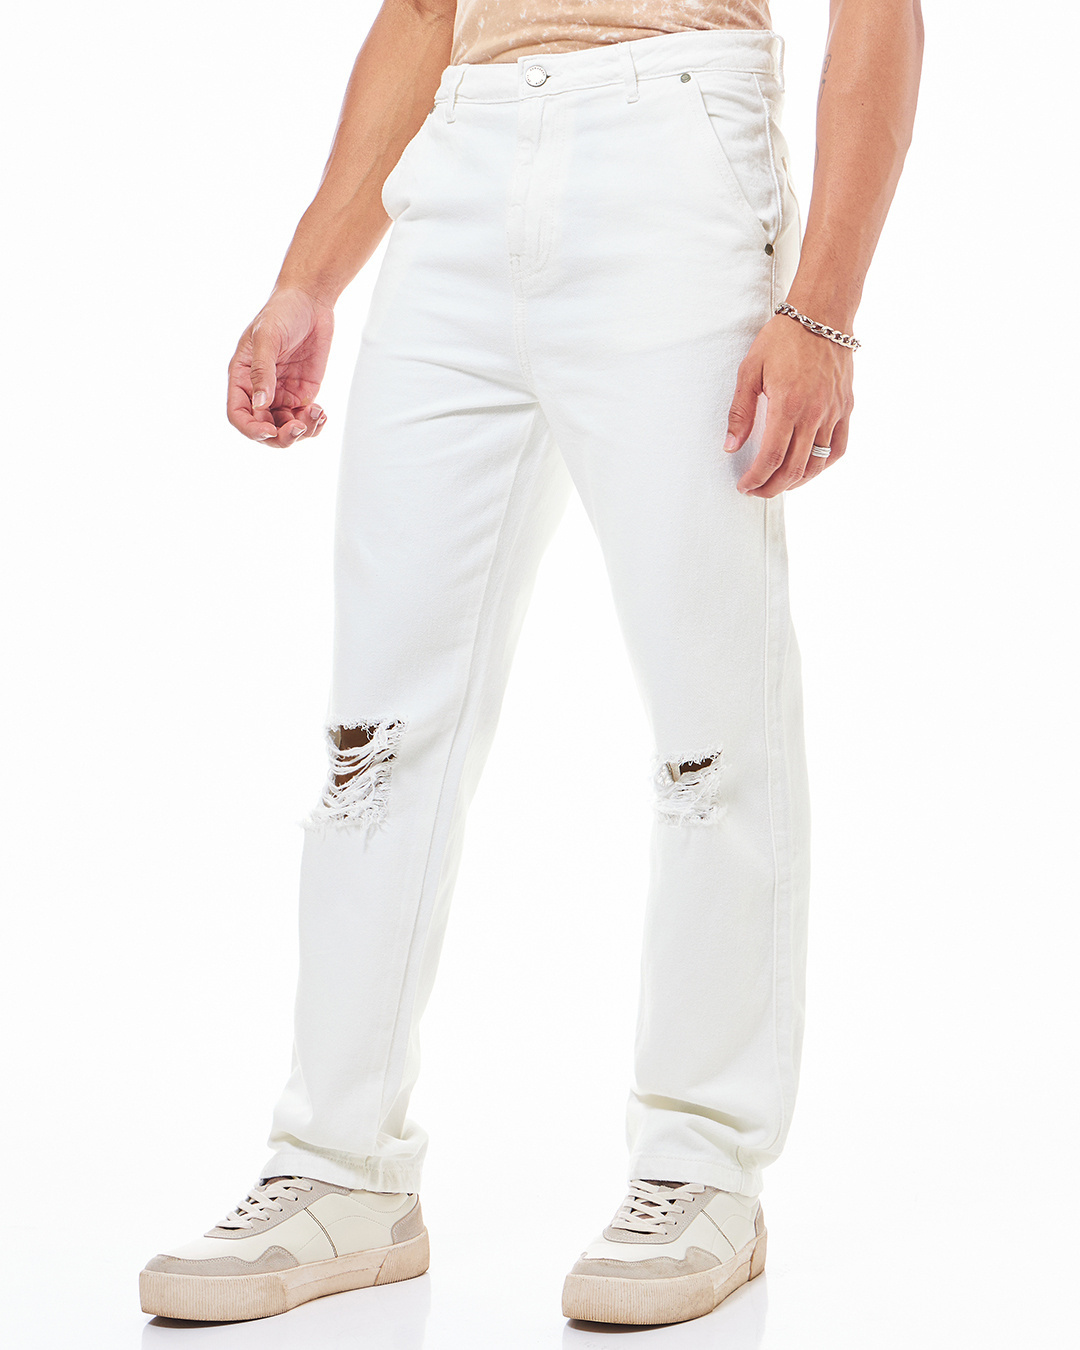 Shop Men's White Distressed Jeans-Back